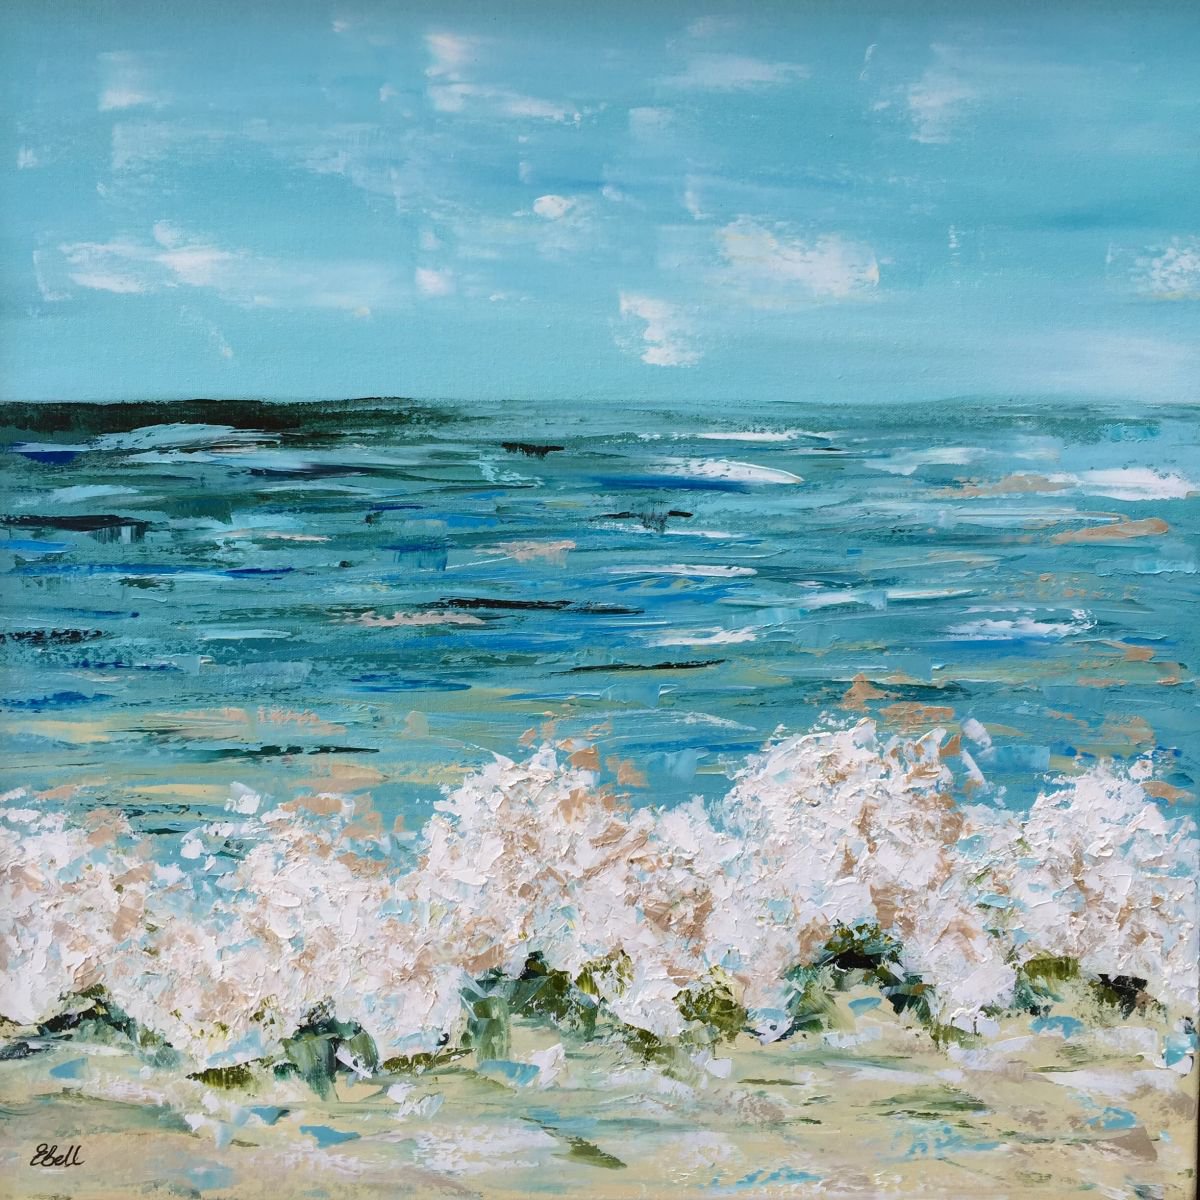 Tempting Tide - aqua seascape 24x24 by Emma Bell